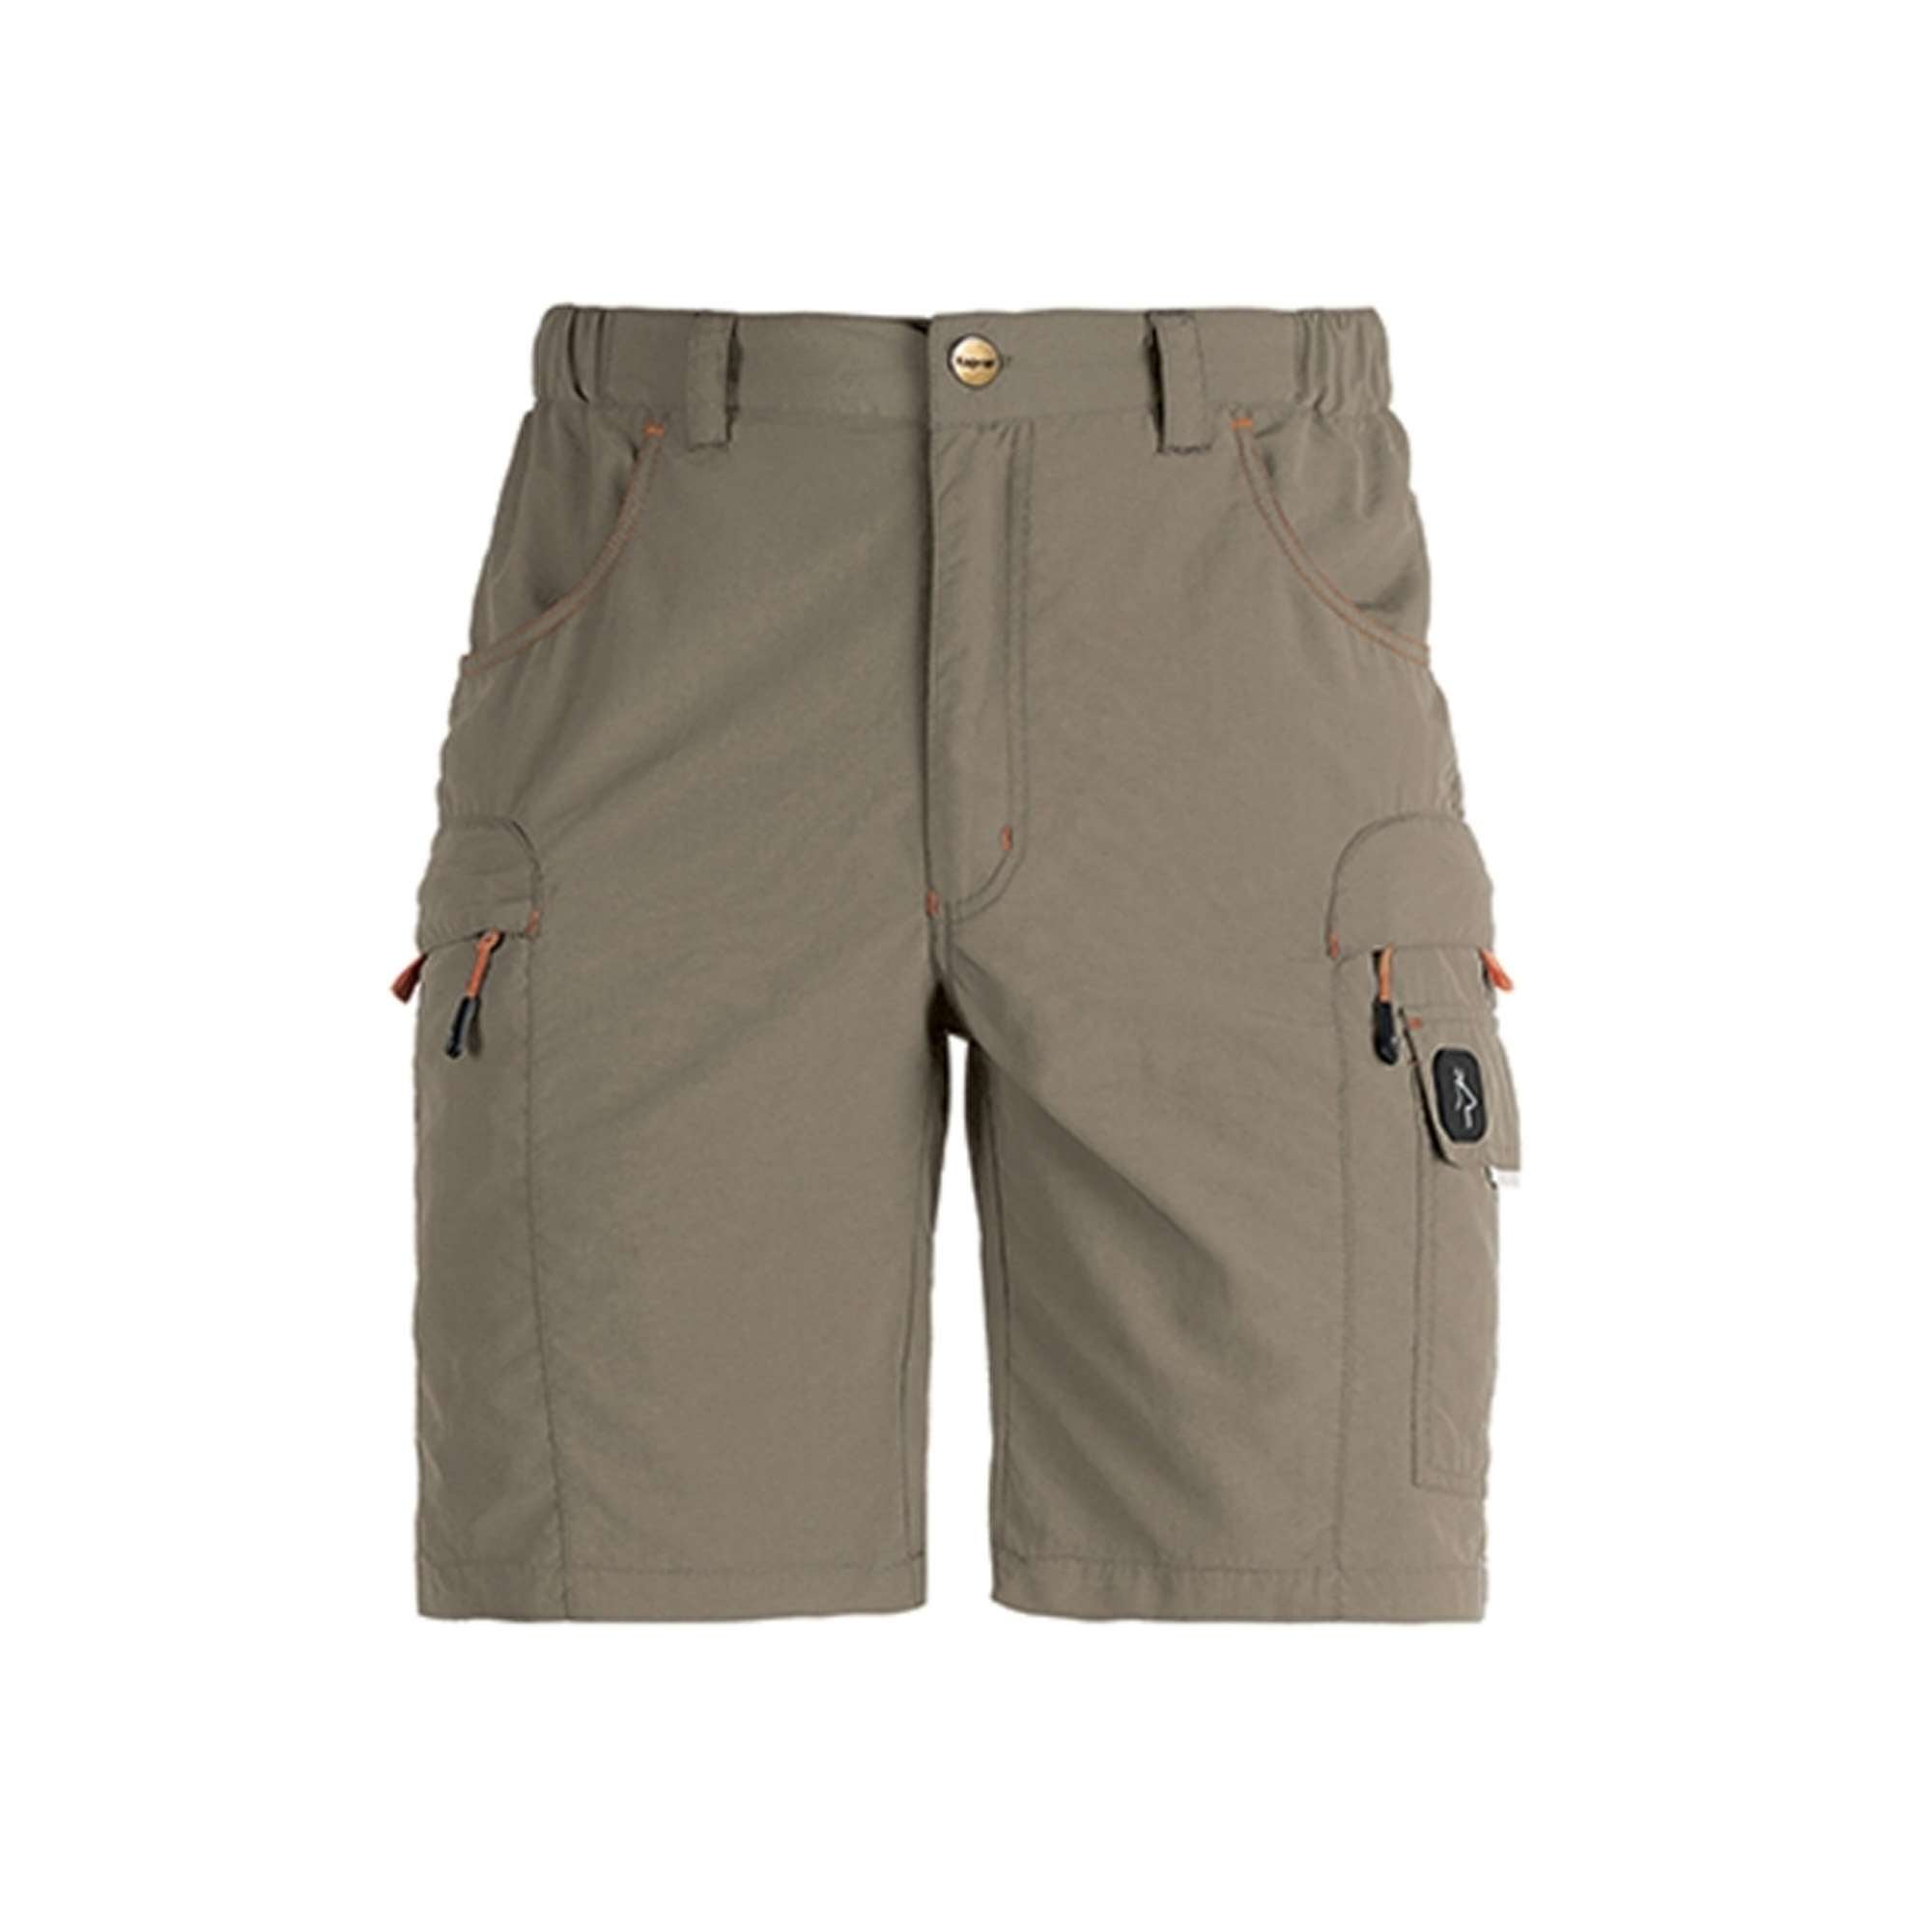 Pantalone corto GHIBLI verde/beige TG M/L/XXL Kapriol